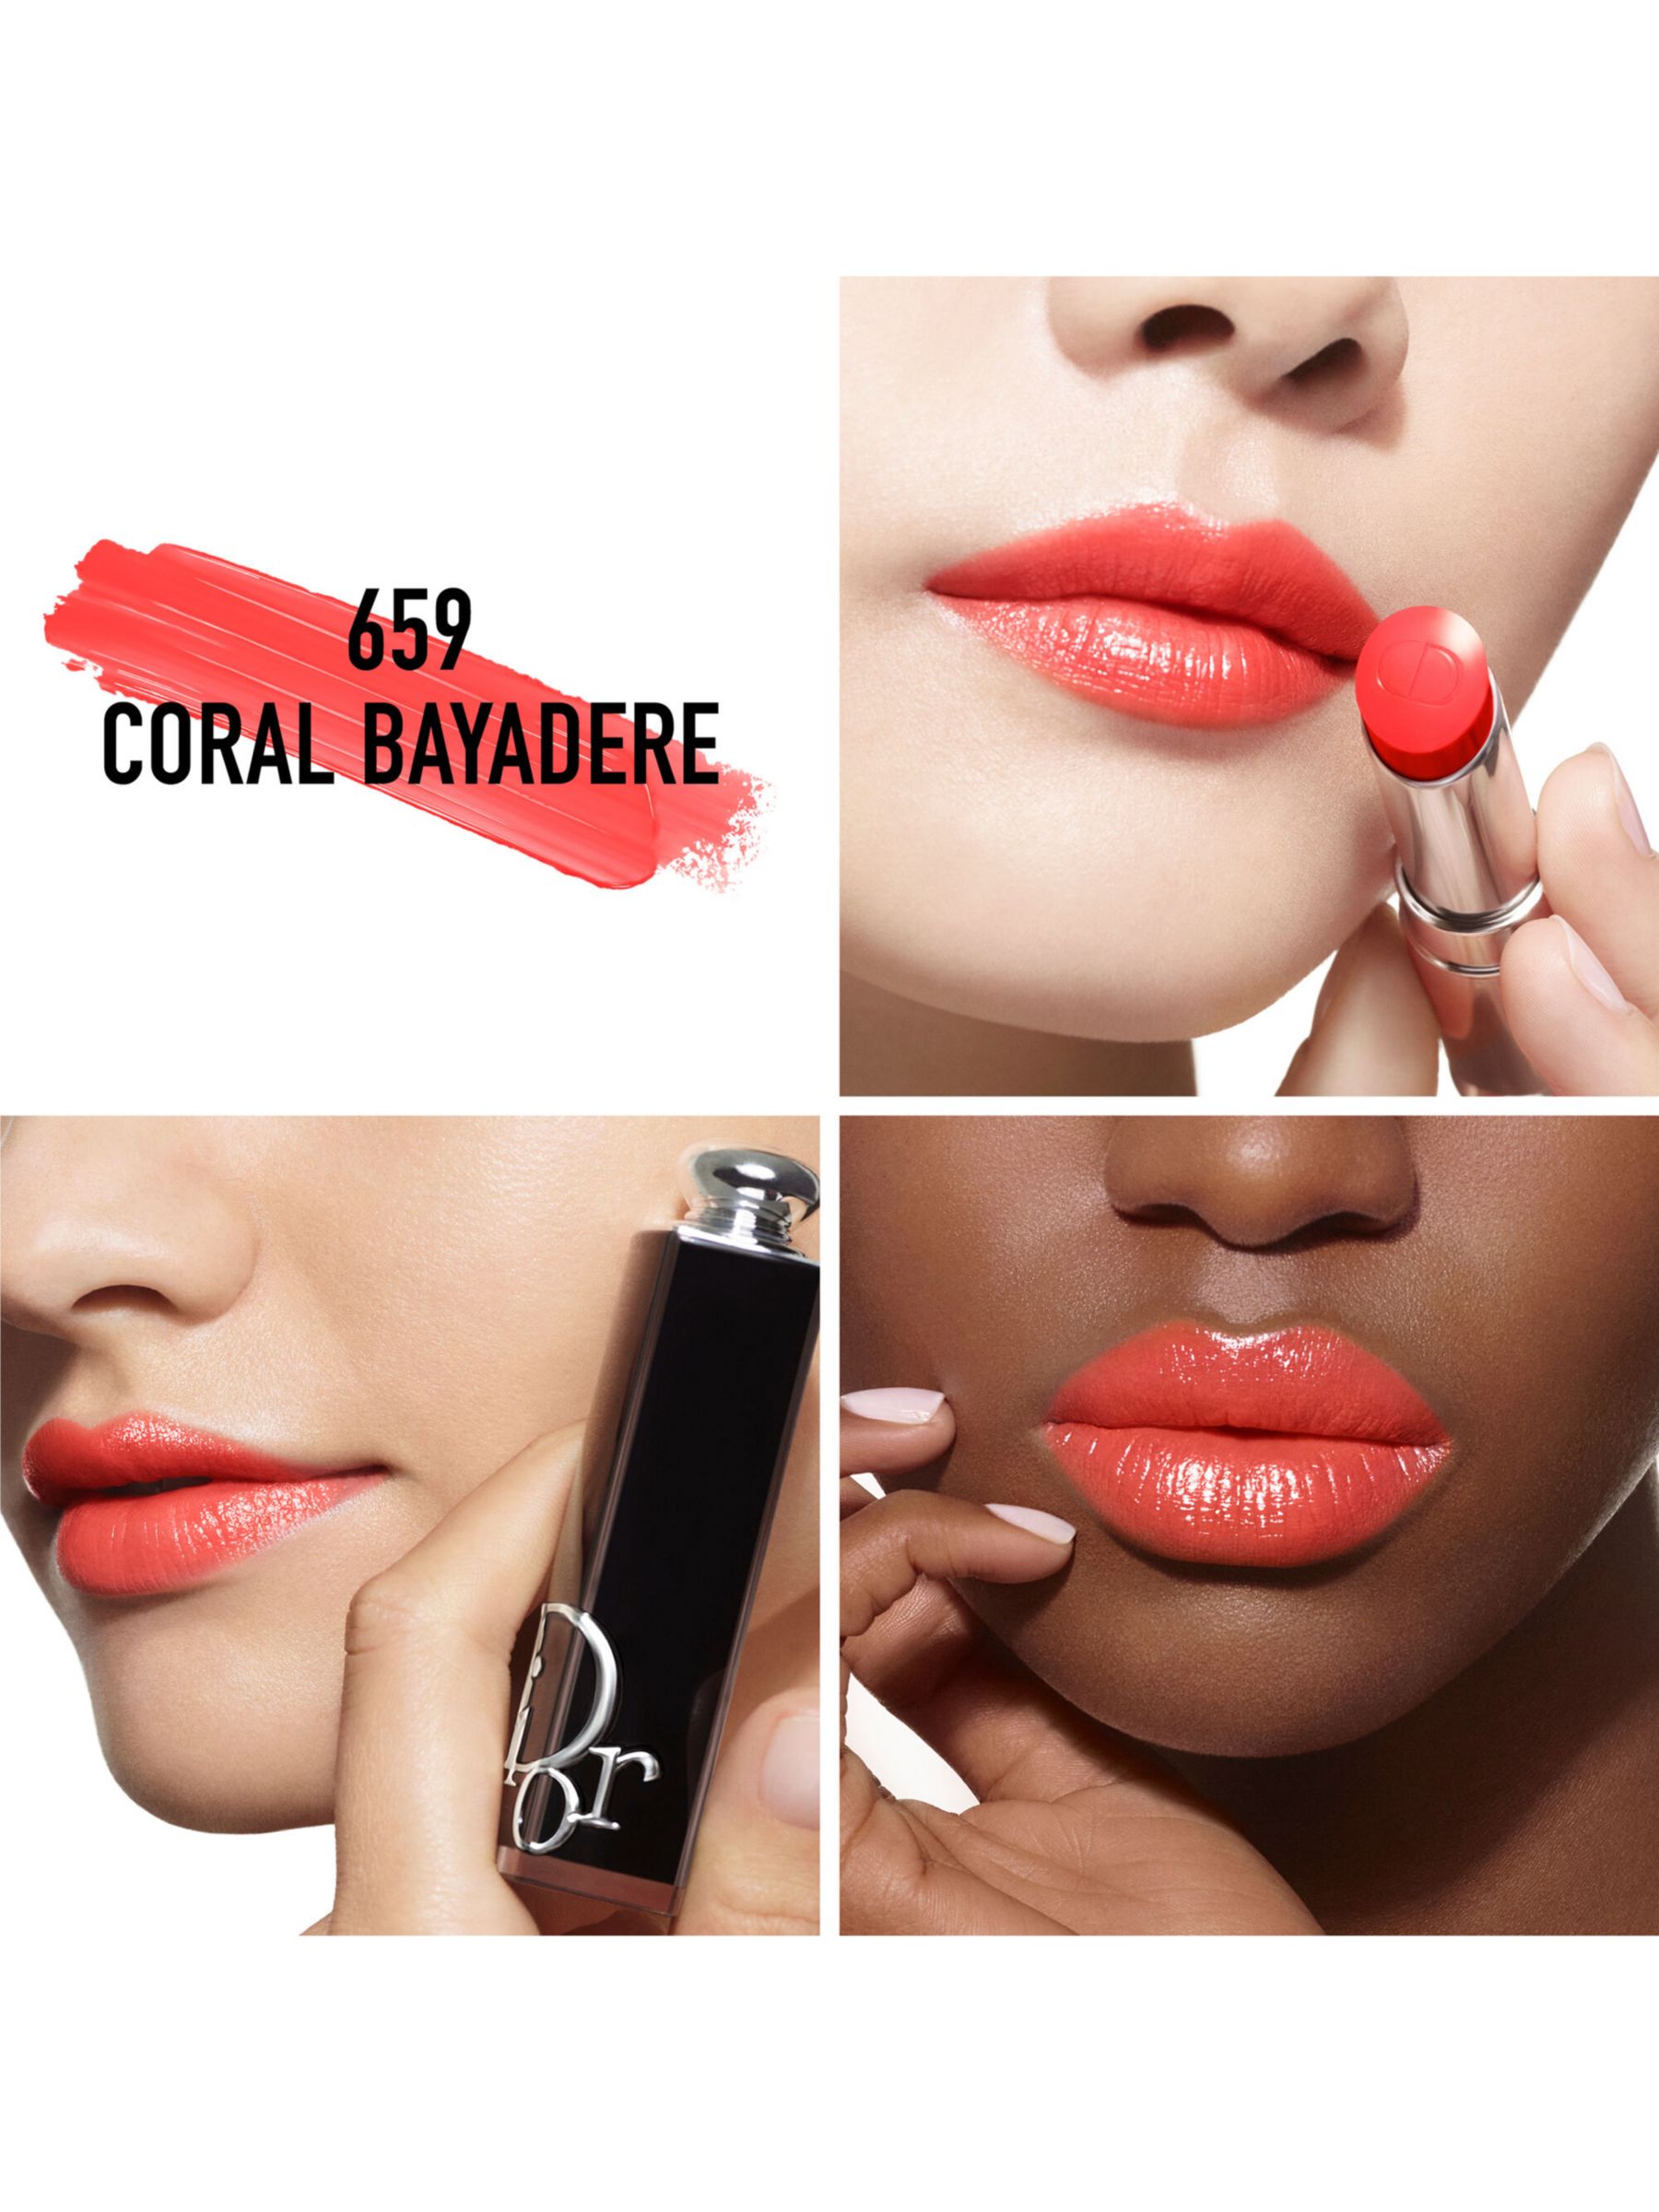 DIOR Addict Shine Refillable Lipstick, 659 Coral Bayadere at John Lewis &  Partners